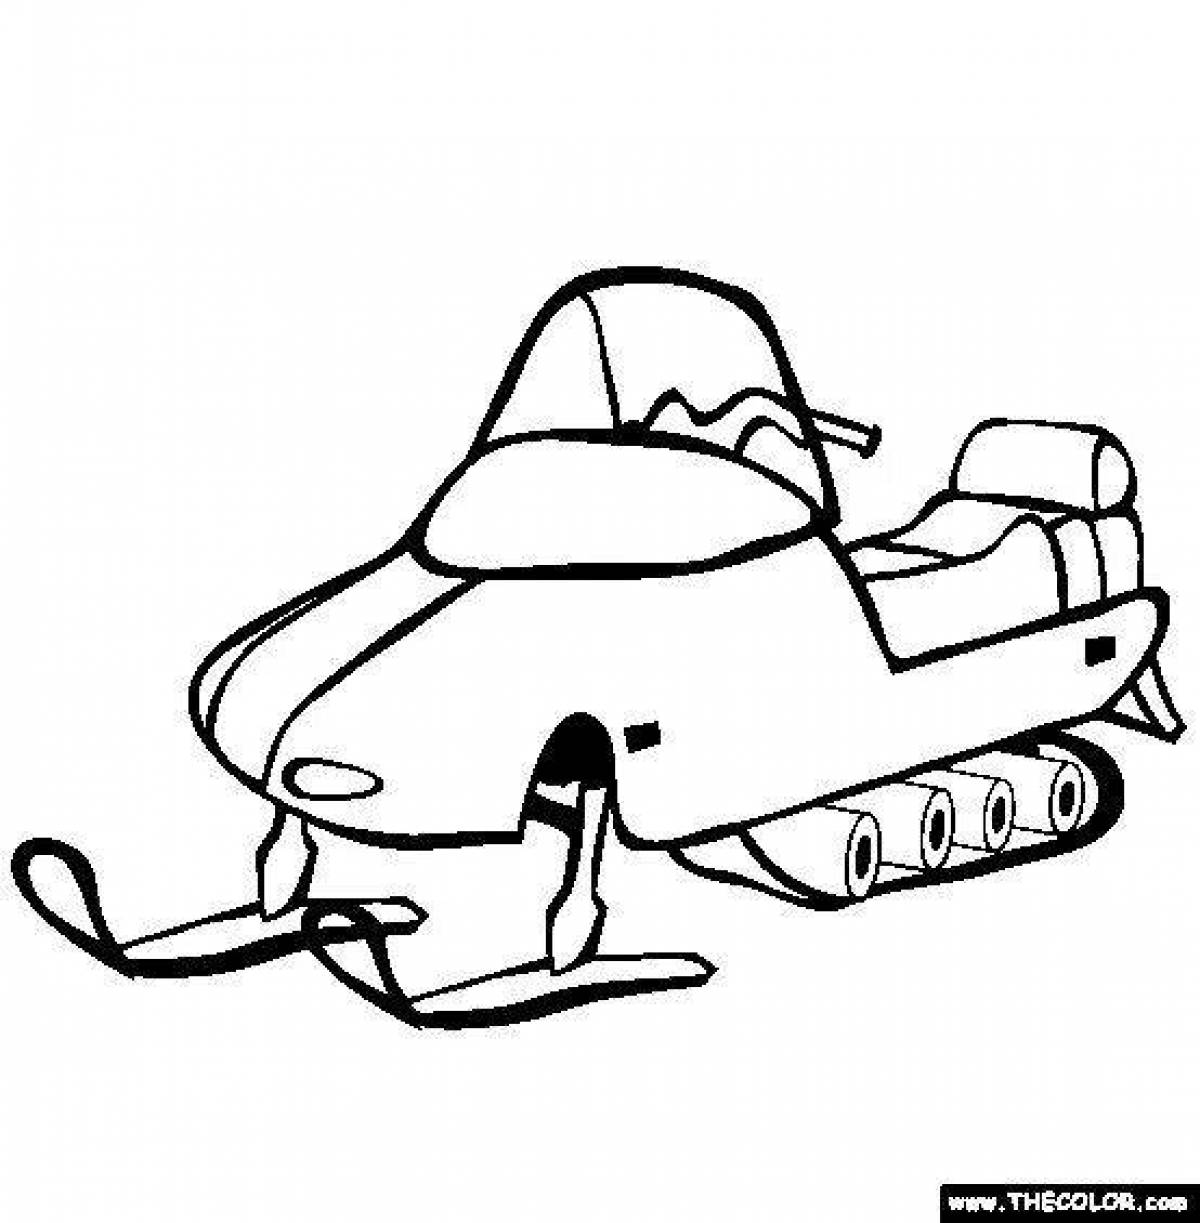 Фото Игривая страница раскраски снежного самоката